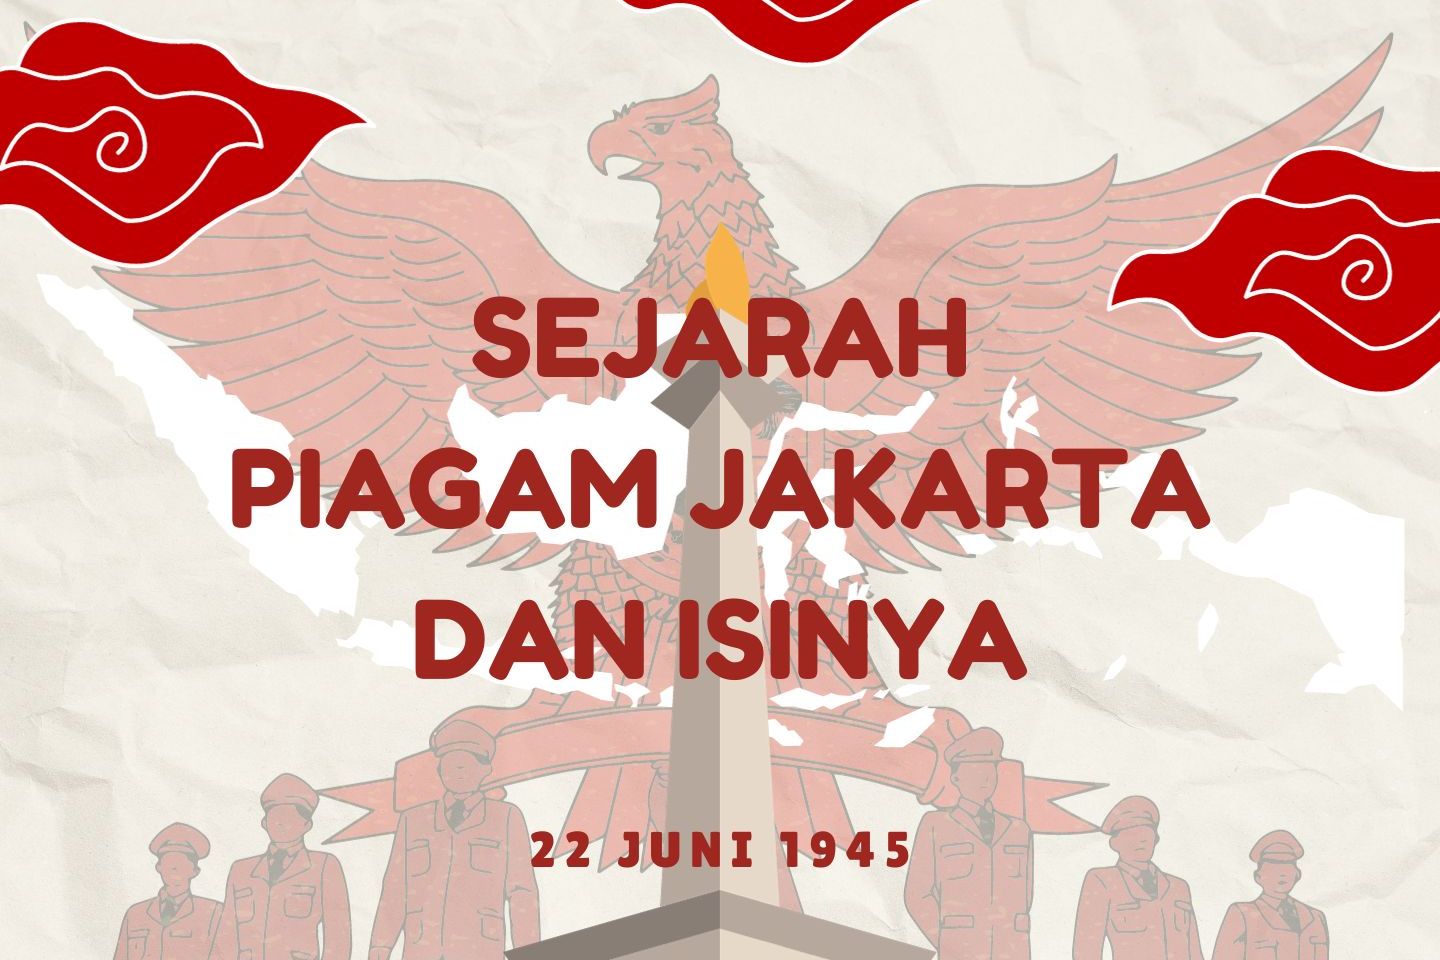 Sejarah Piagam Jakarta dan Isinya